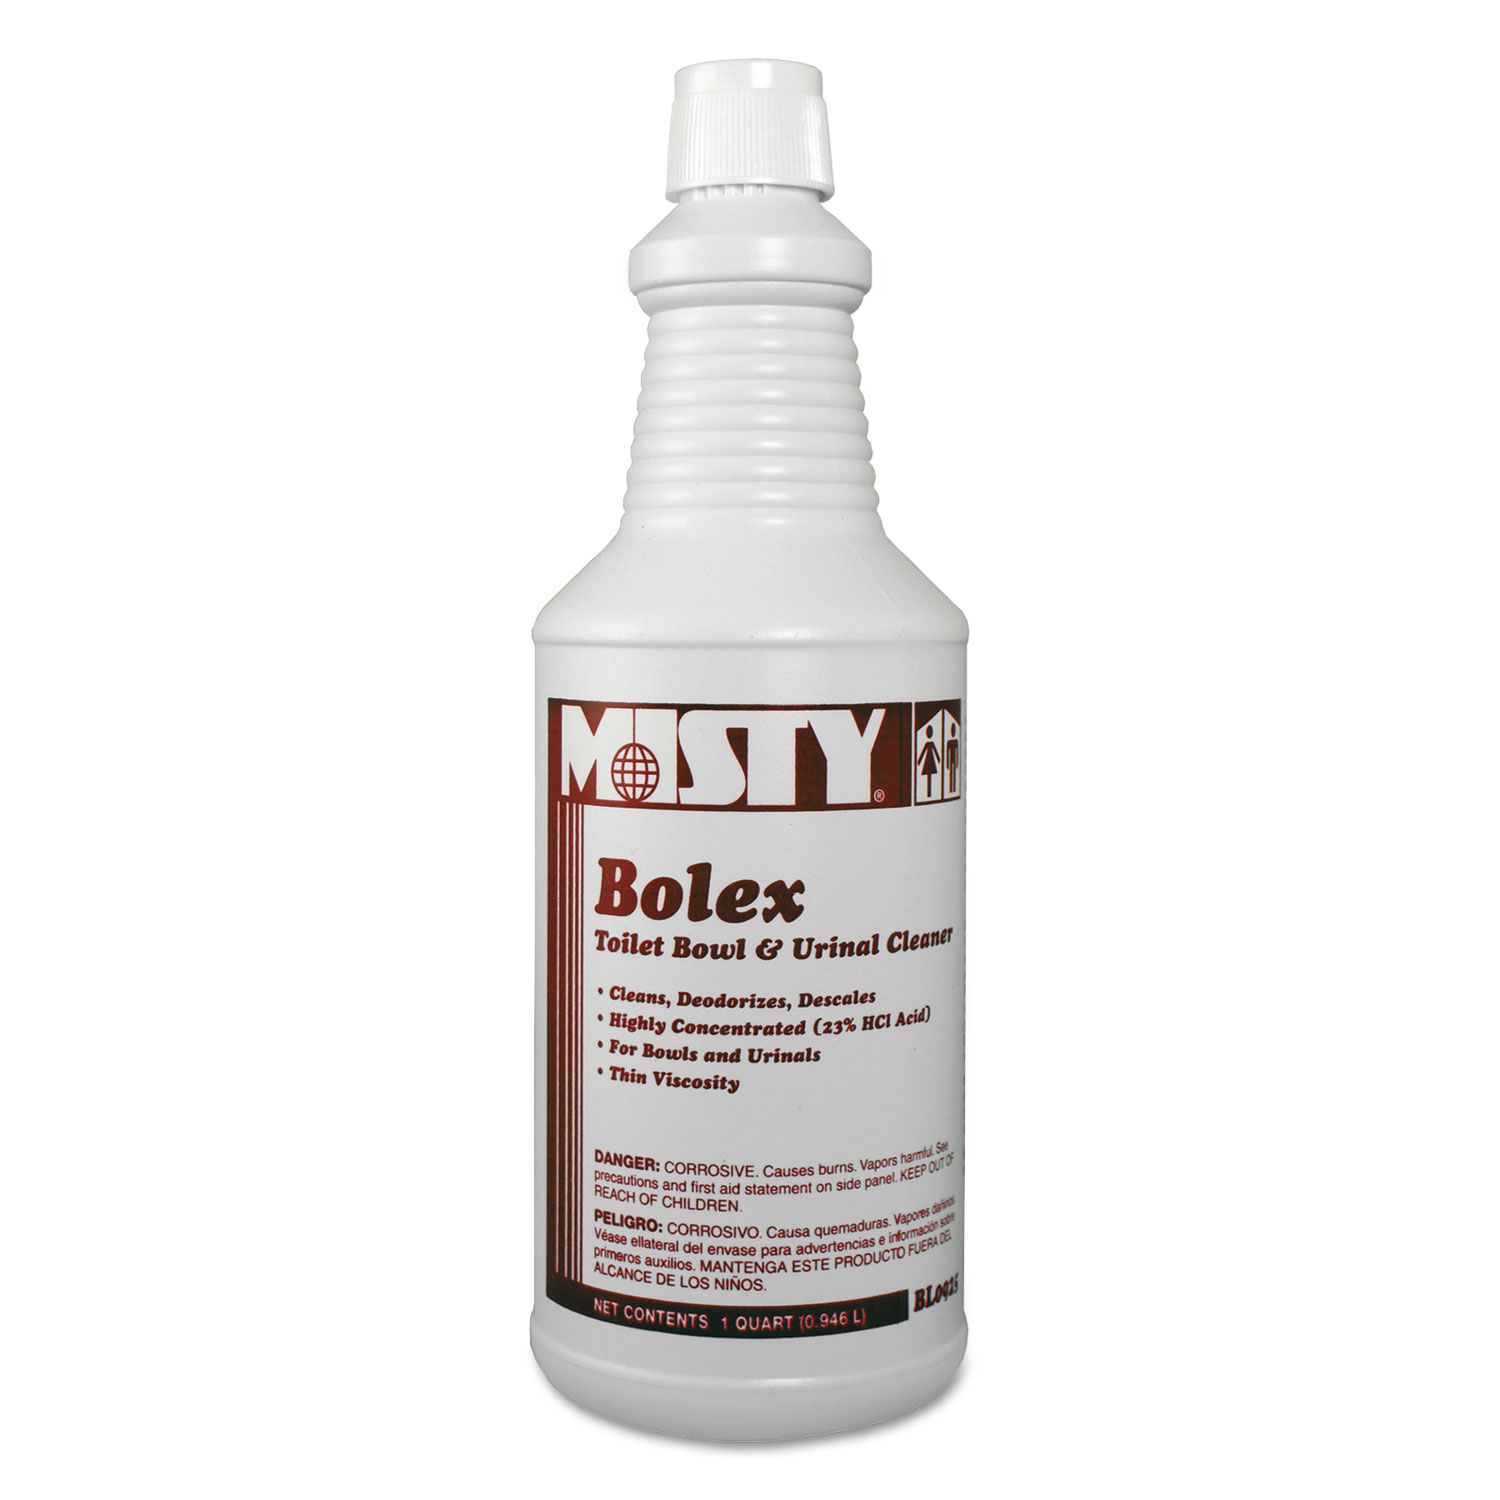  Misty 1038799 Bolex 23 Percent Hydrochloric Acid Bowl Cleaner, Wintergreen, 32oz, 12/Carton (AMR1038799) 